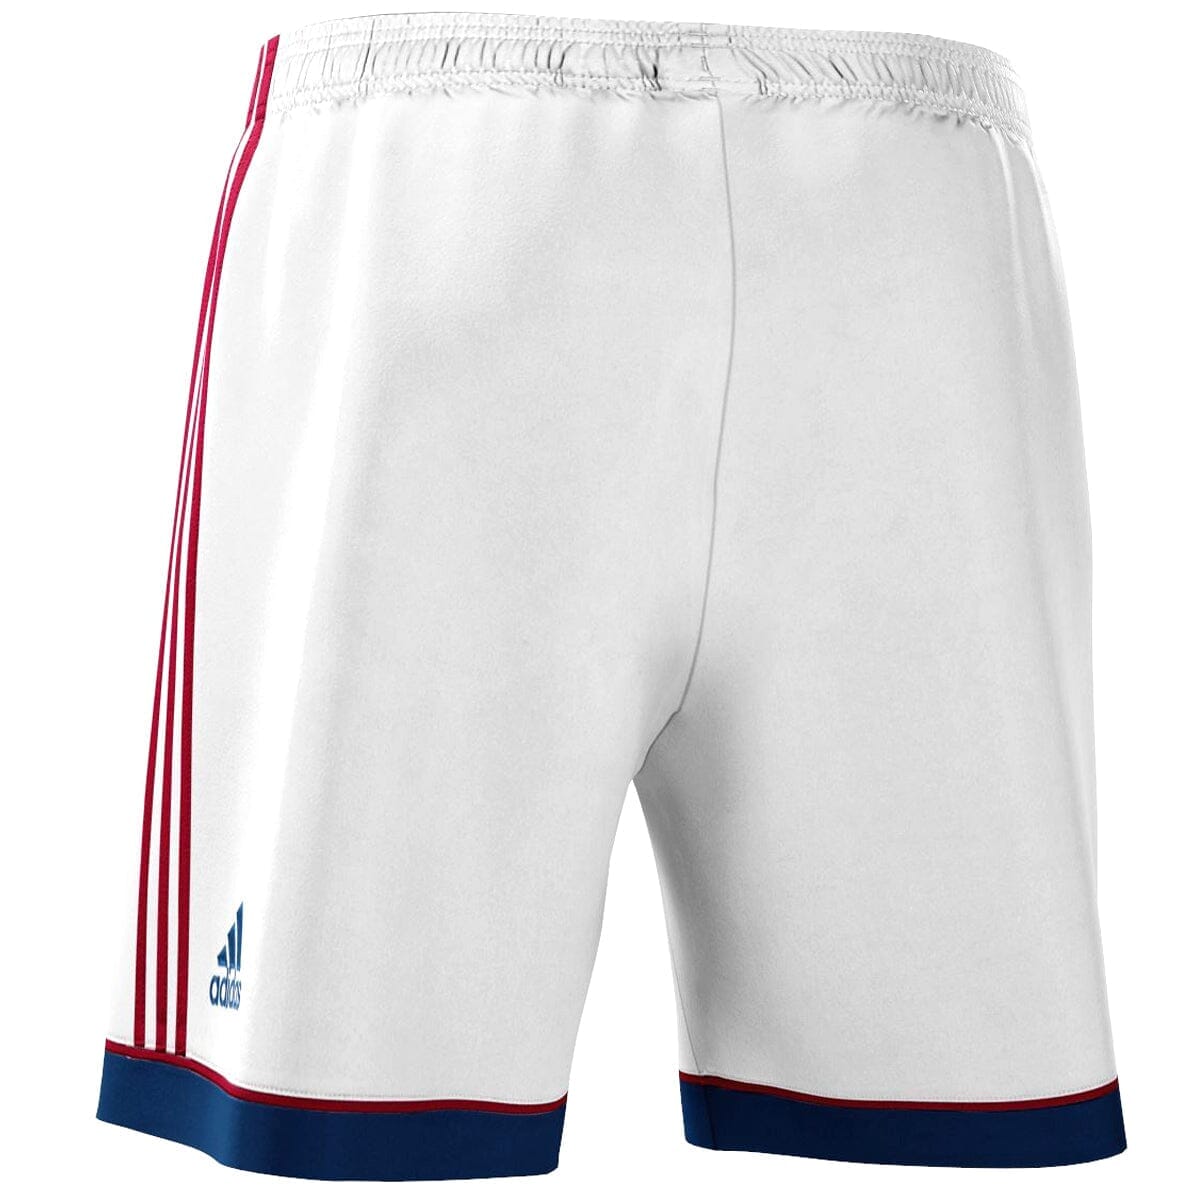 adidas miSquadra 17 Youth Custom Shorts Apparel Adidas Youth Small (8-10) White / Red / Blue 